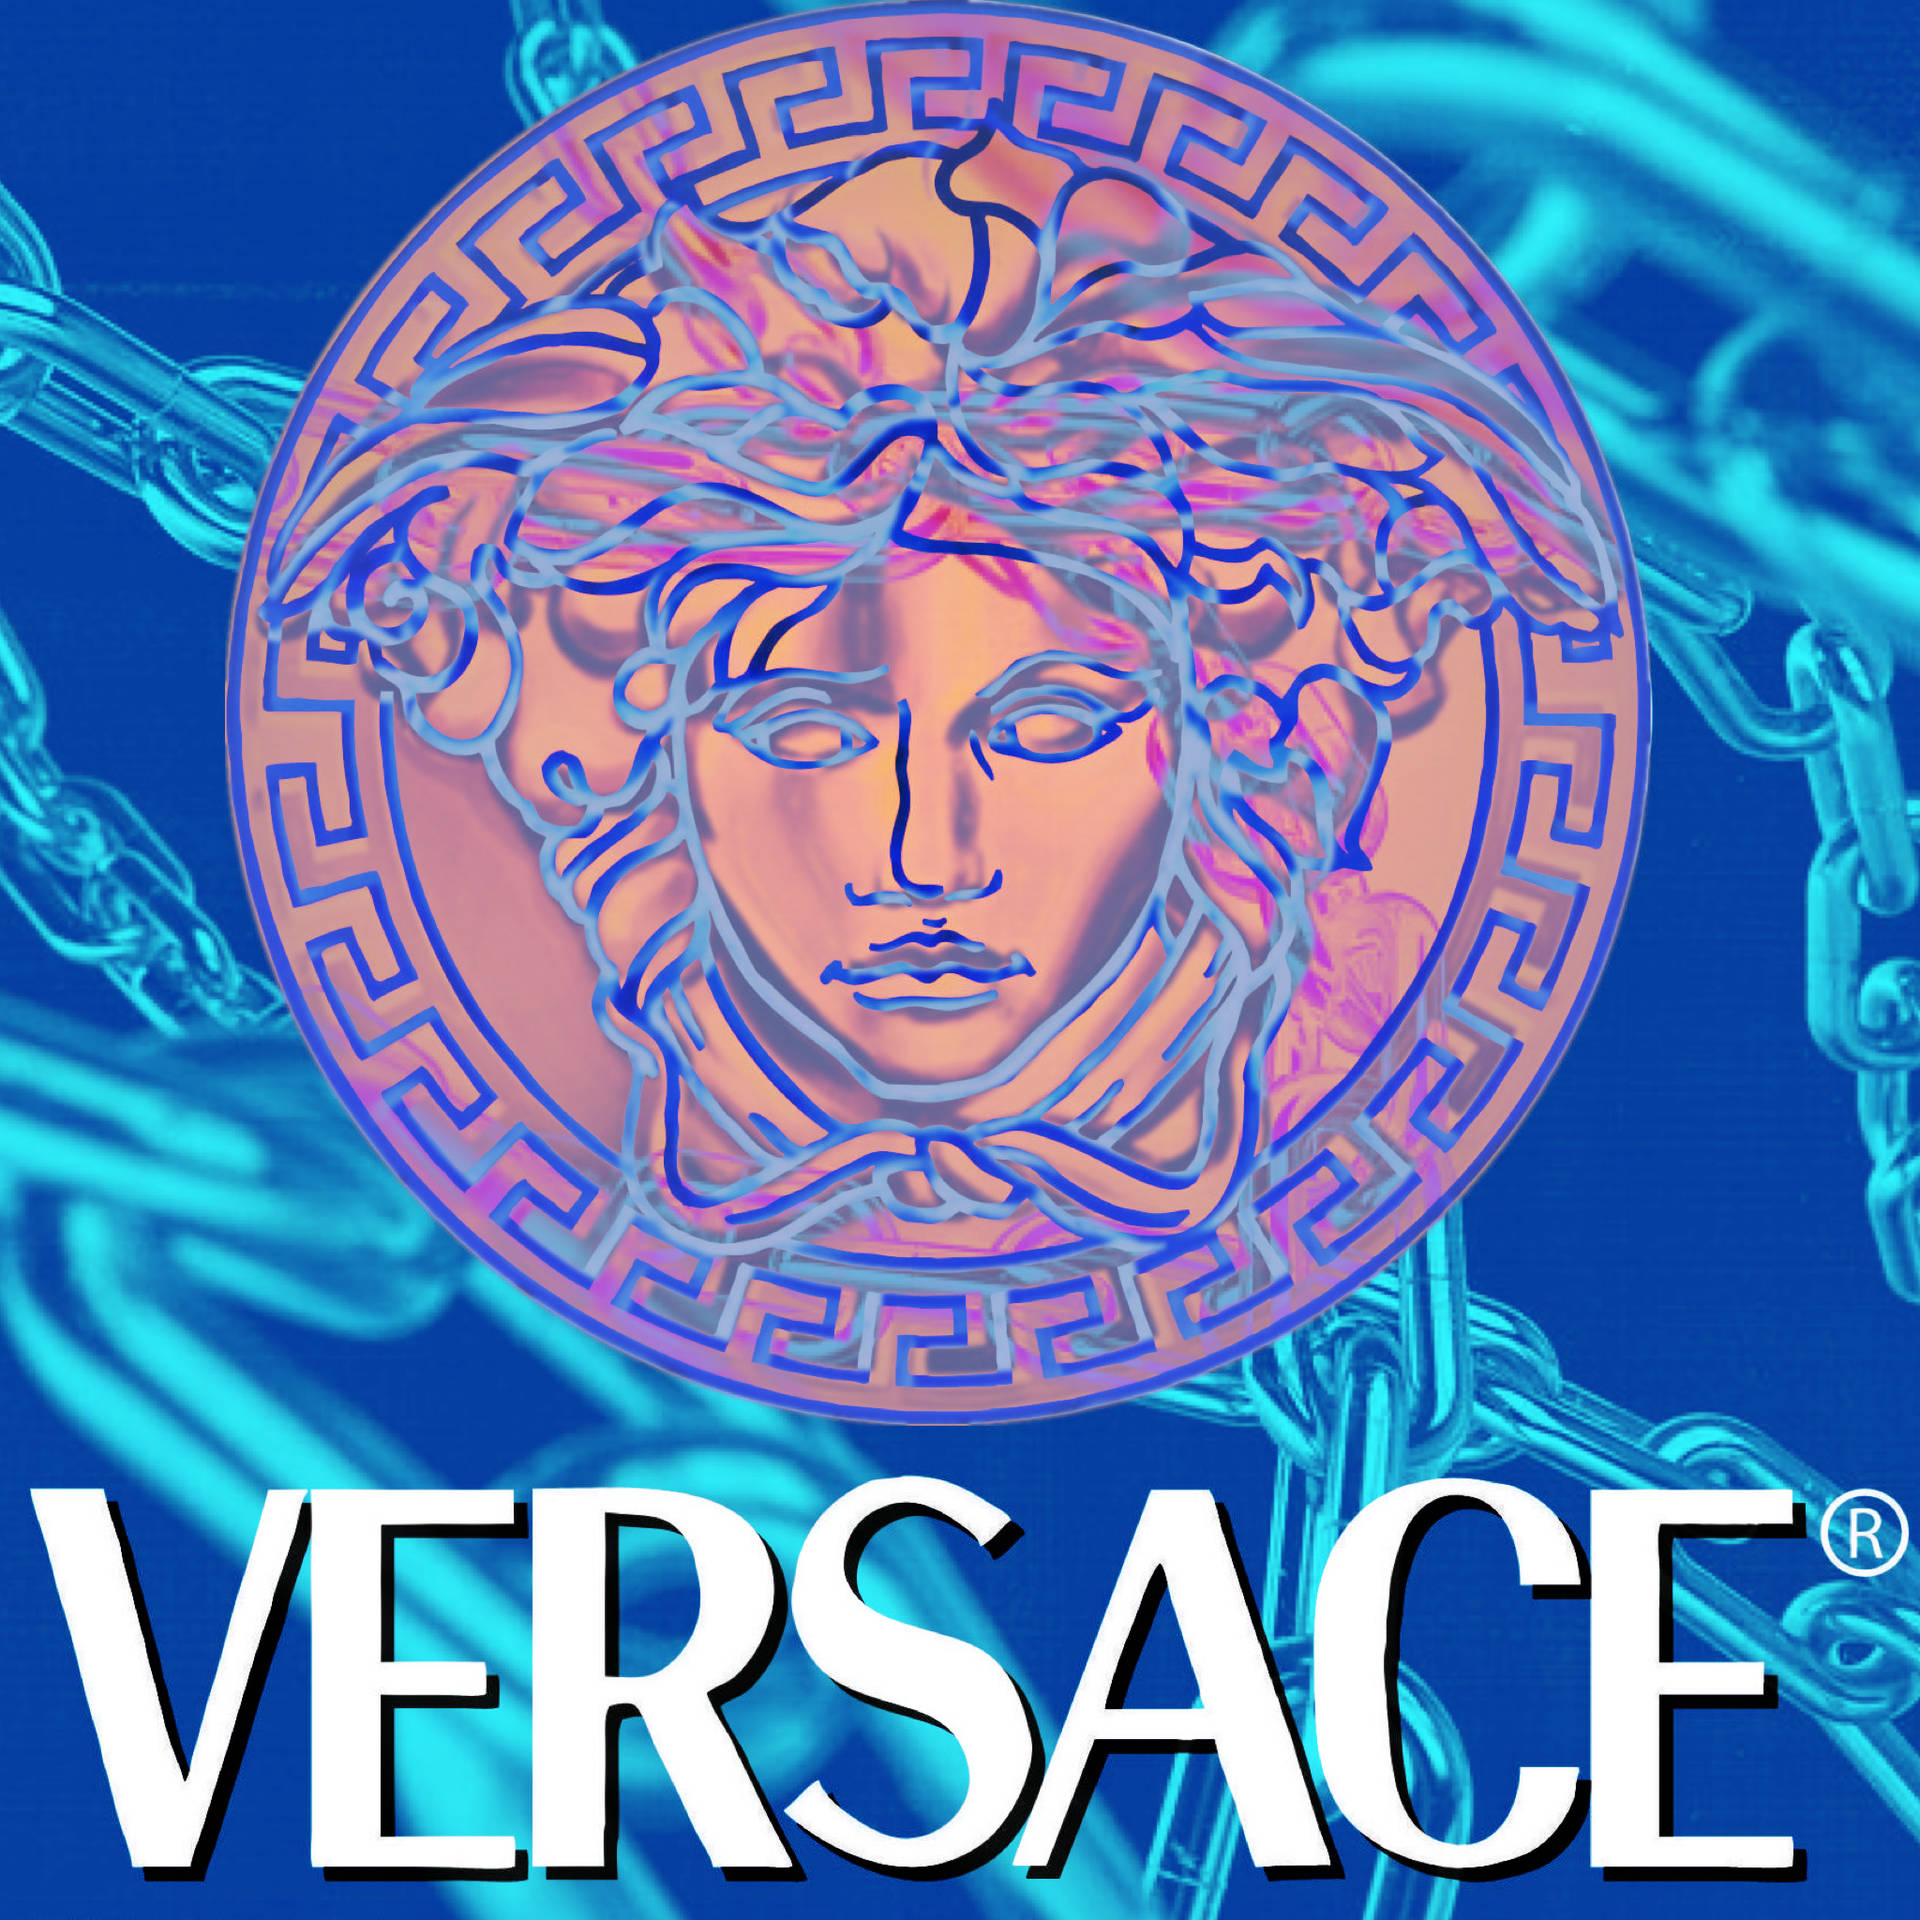 Download Versace Logo 2048 X 2048 Wallpaper | Wallpapers.com